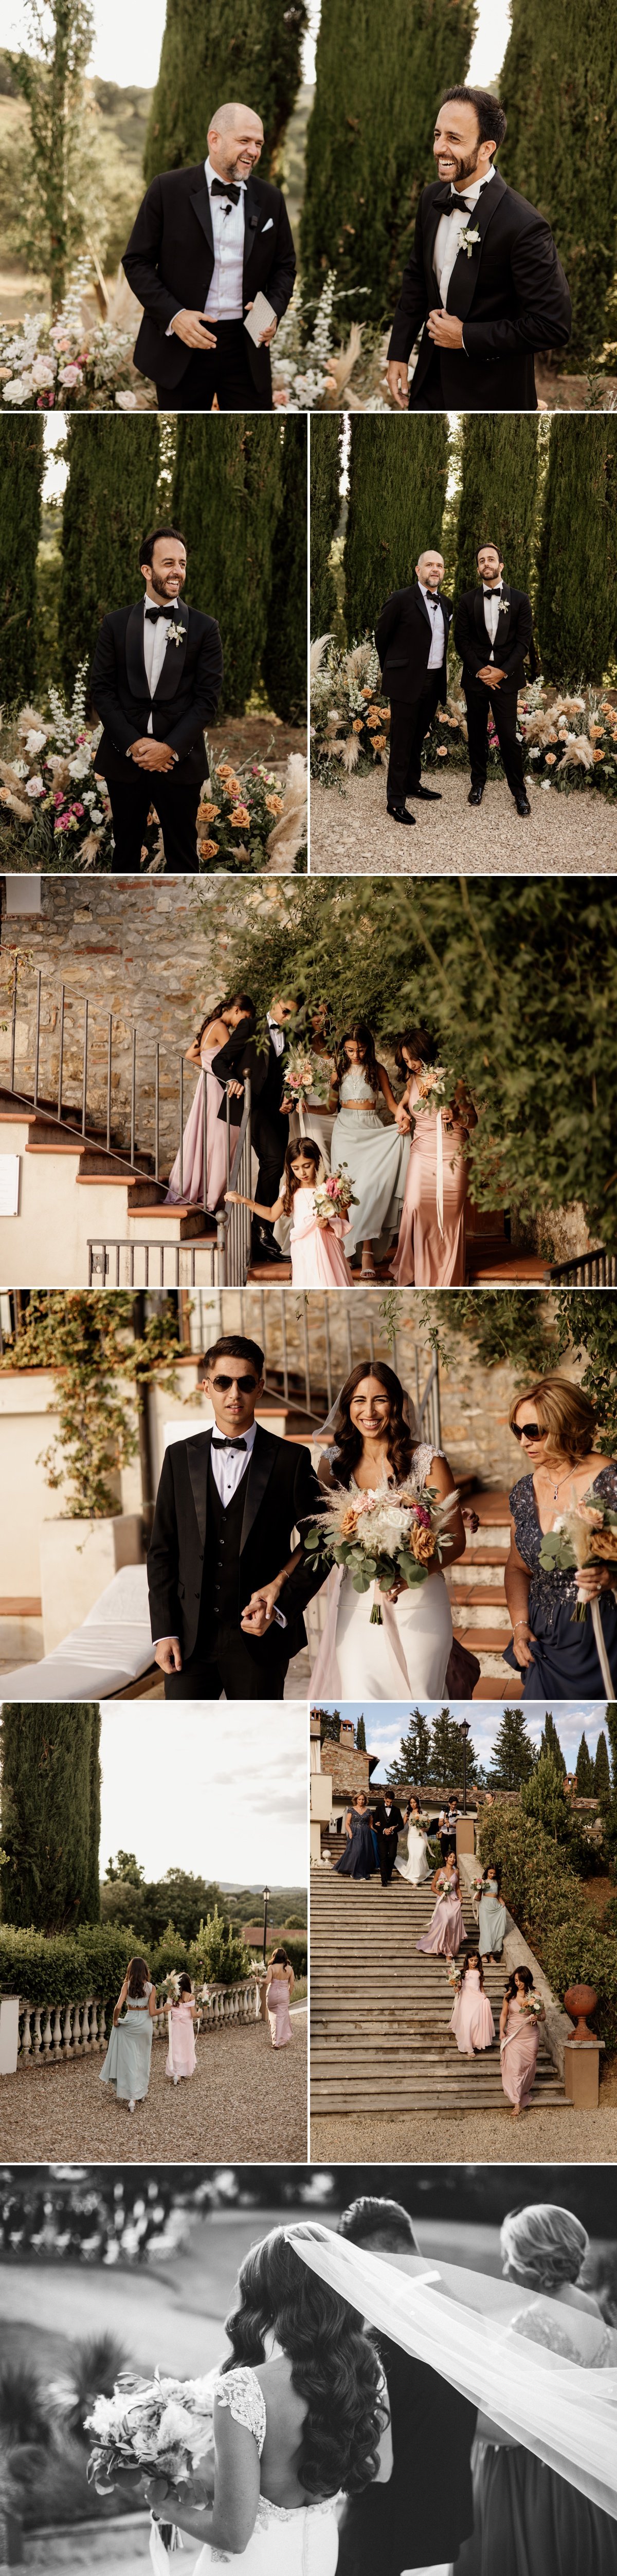 tuscany-wedding-dallk-09.jpg